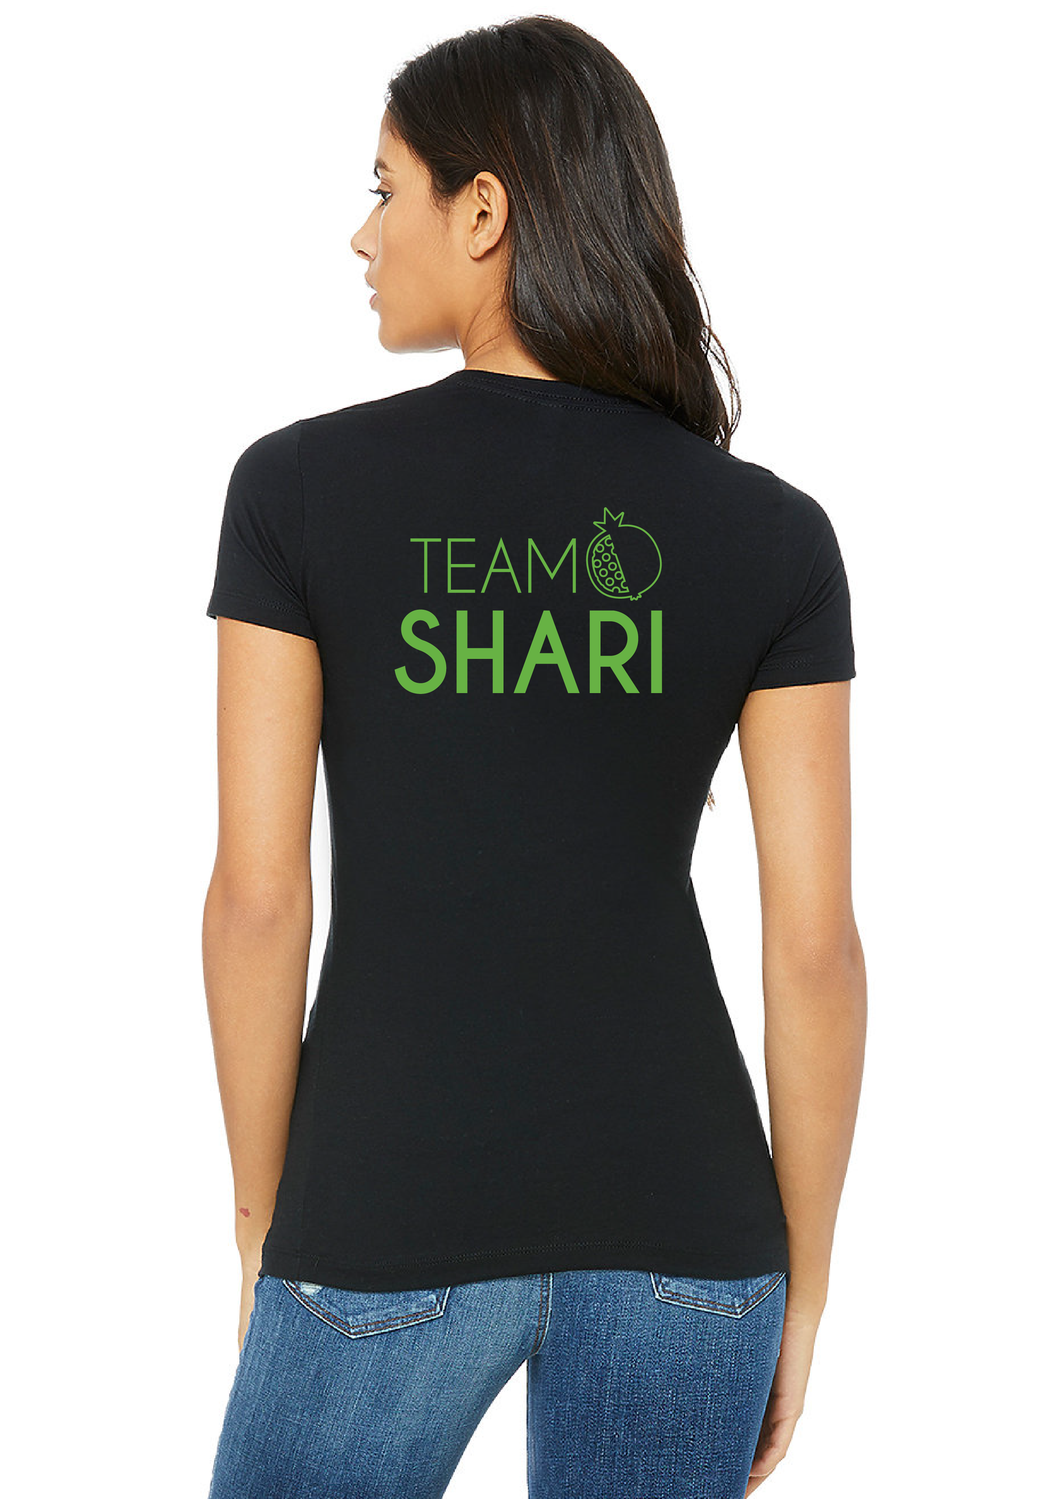 TEAMSHARI T-shirt vrouw (vorige look)